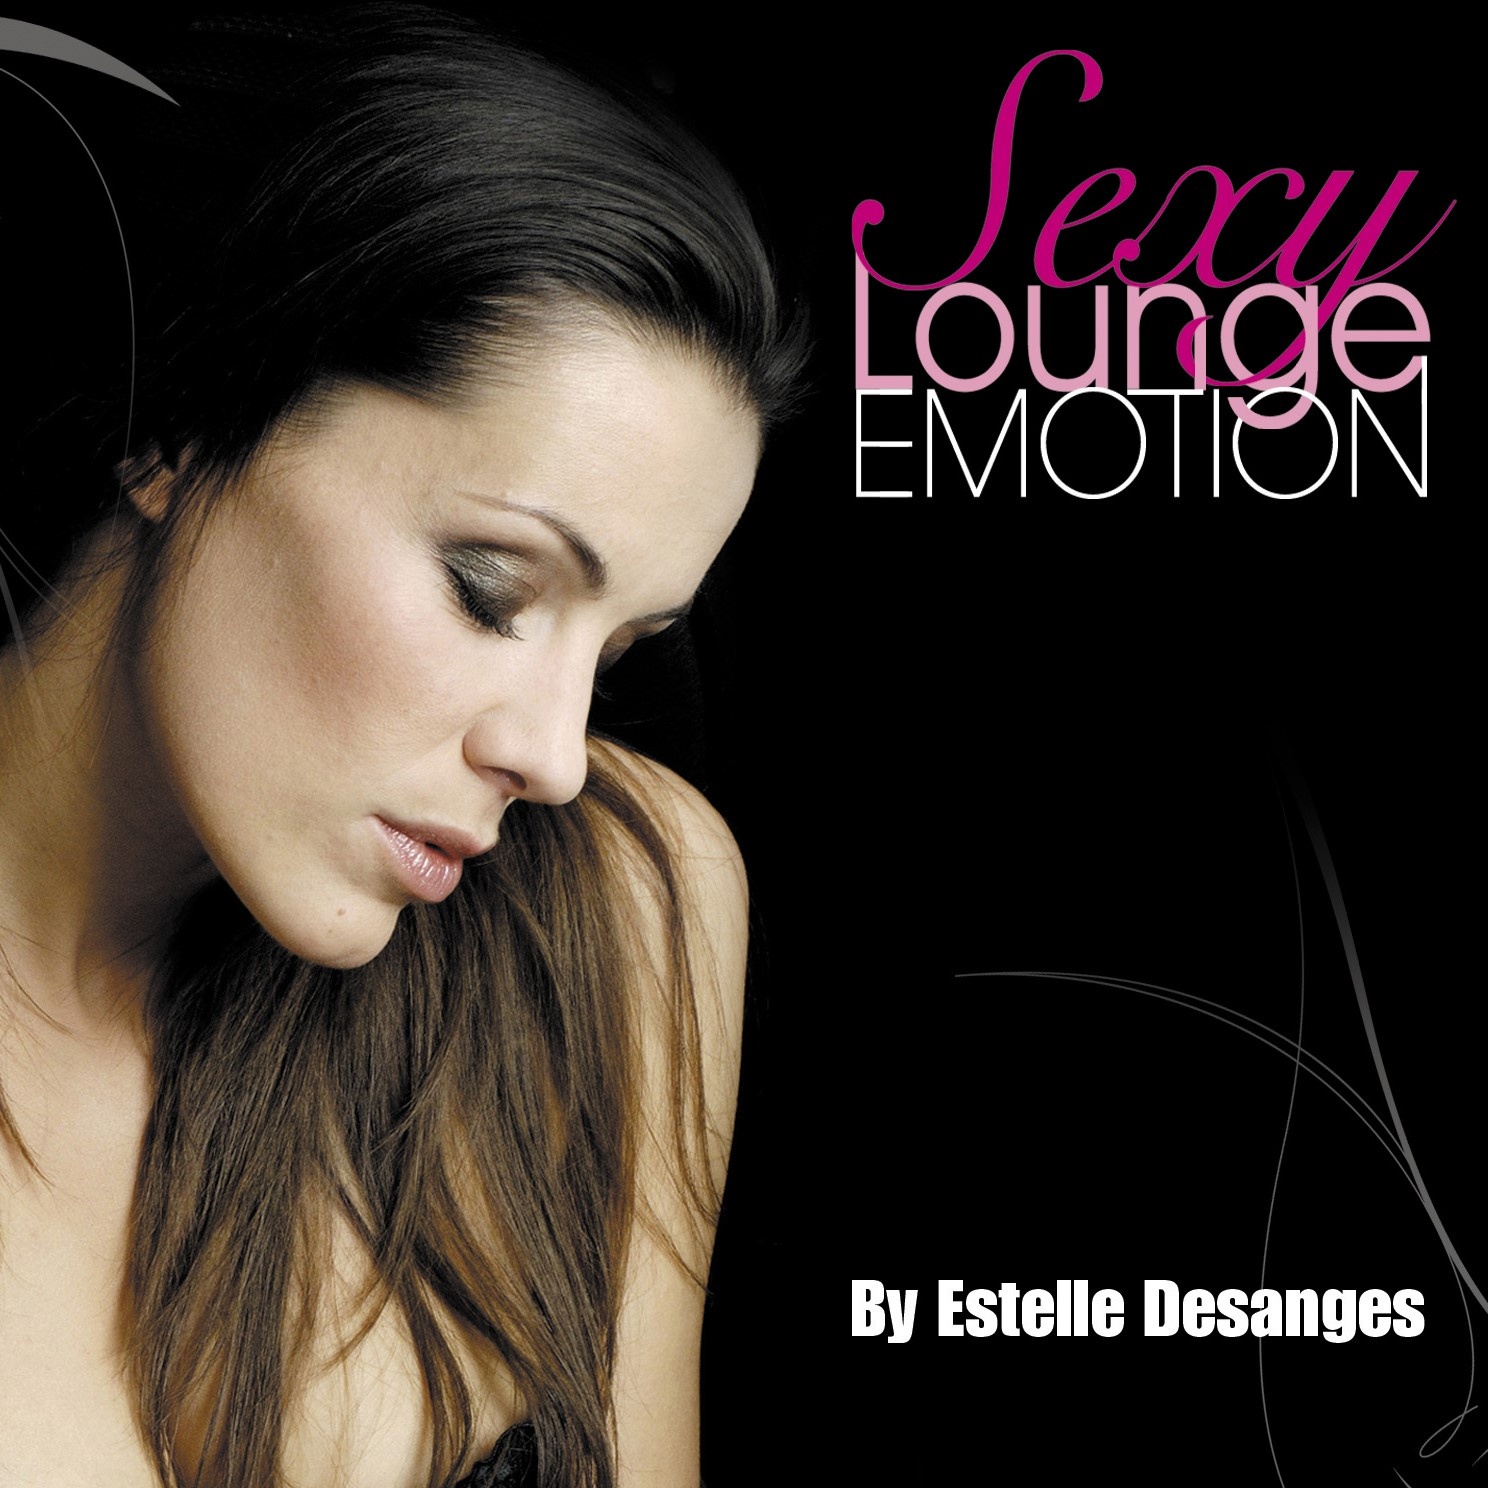 Sexy Lounge Emotion